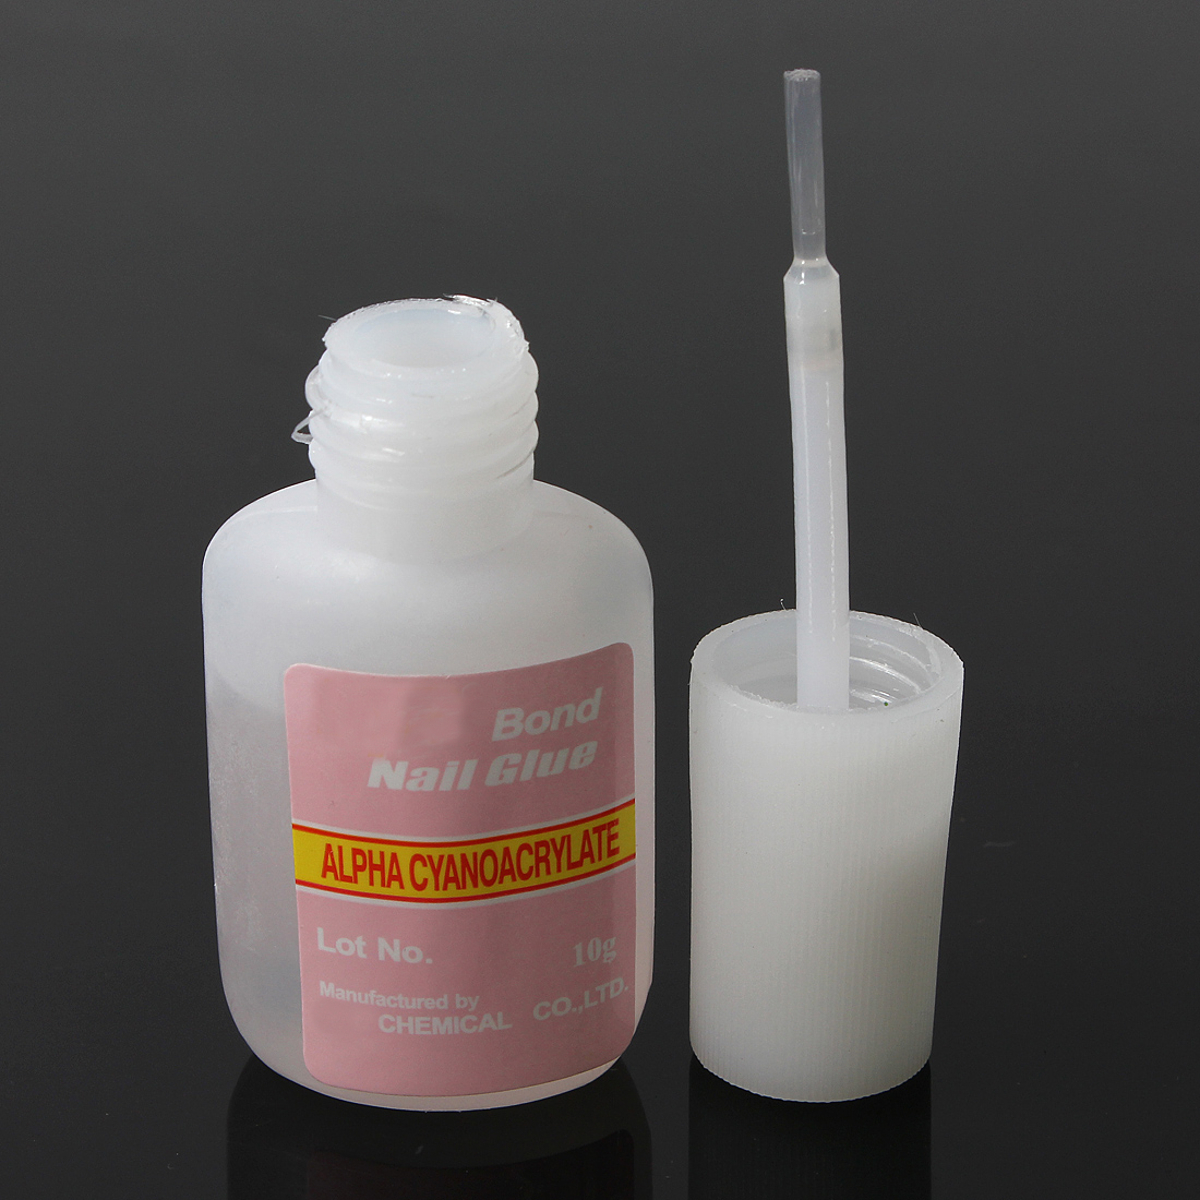 Durable Glitter Nail Glue With Brush  Nail  Art  Adhesive Supplies